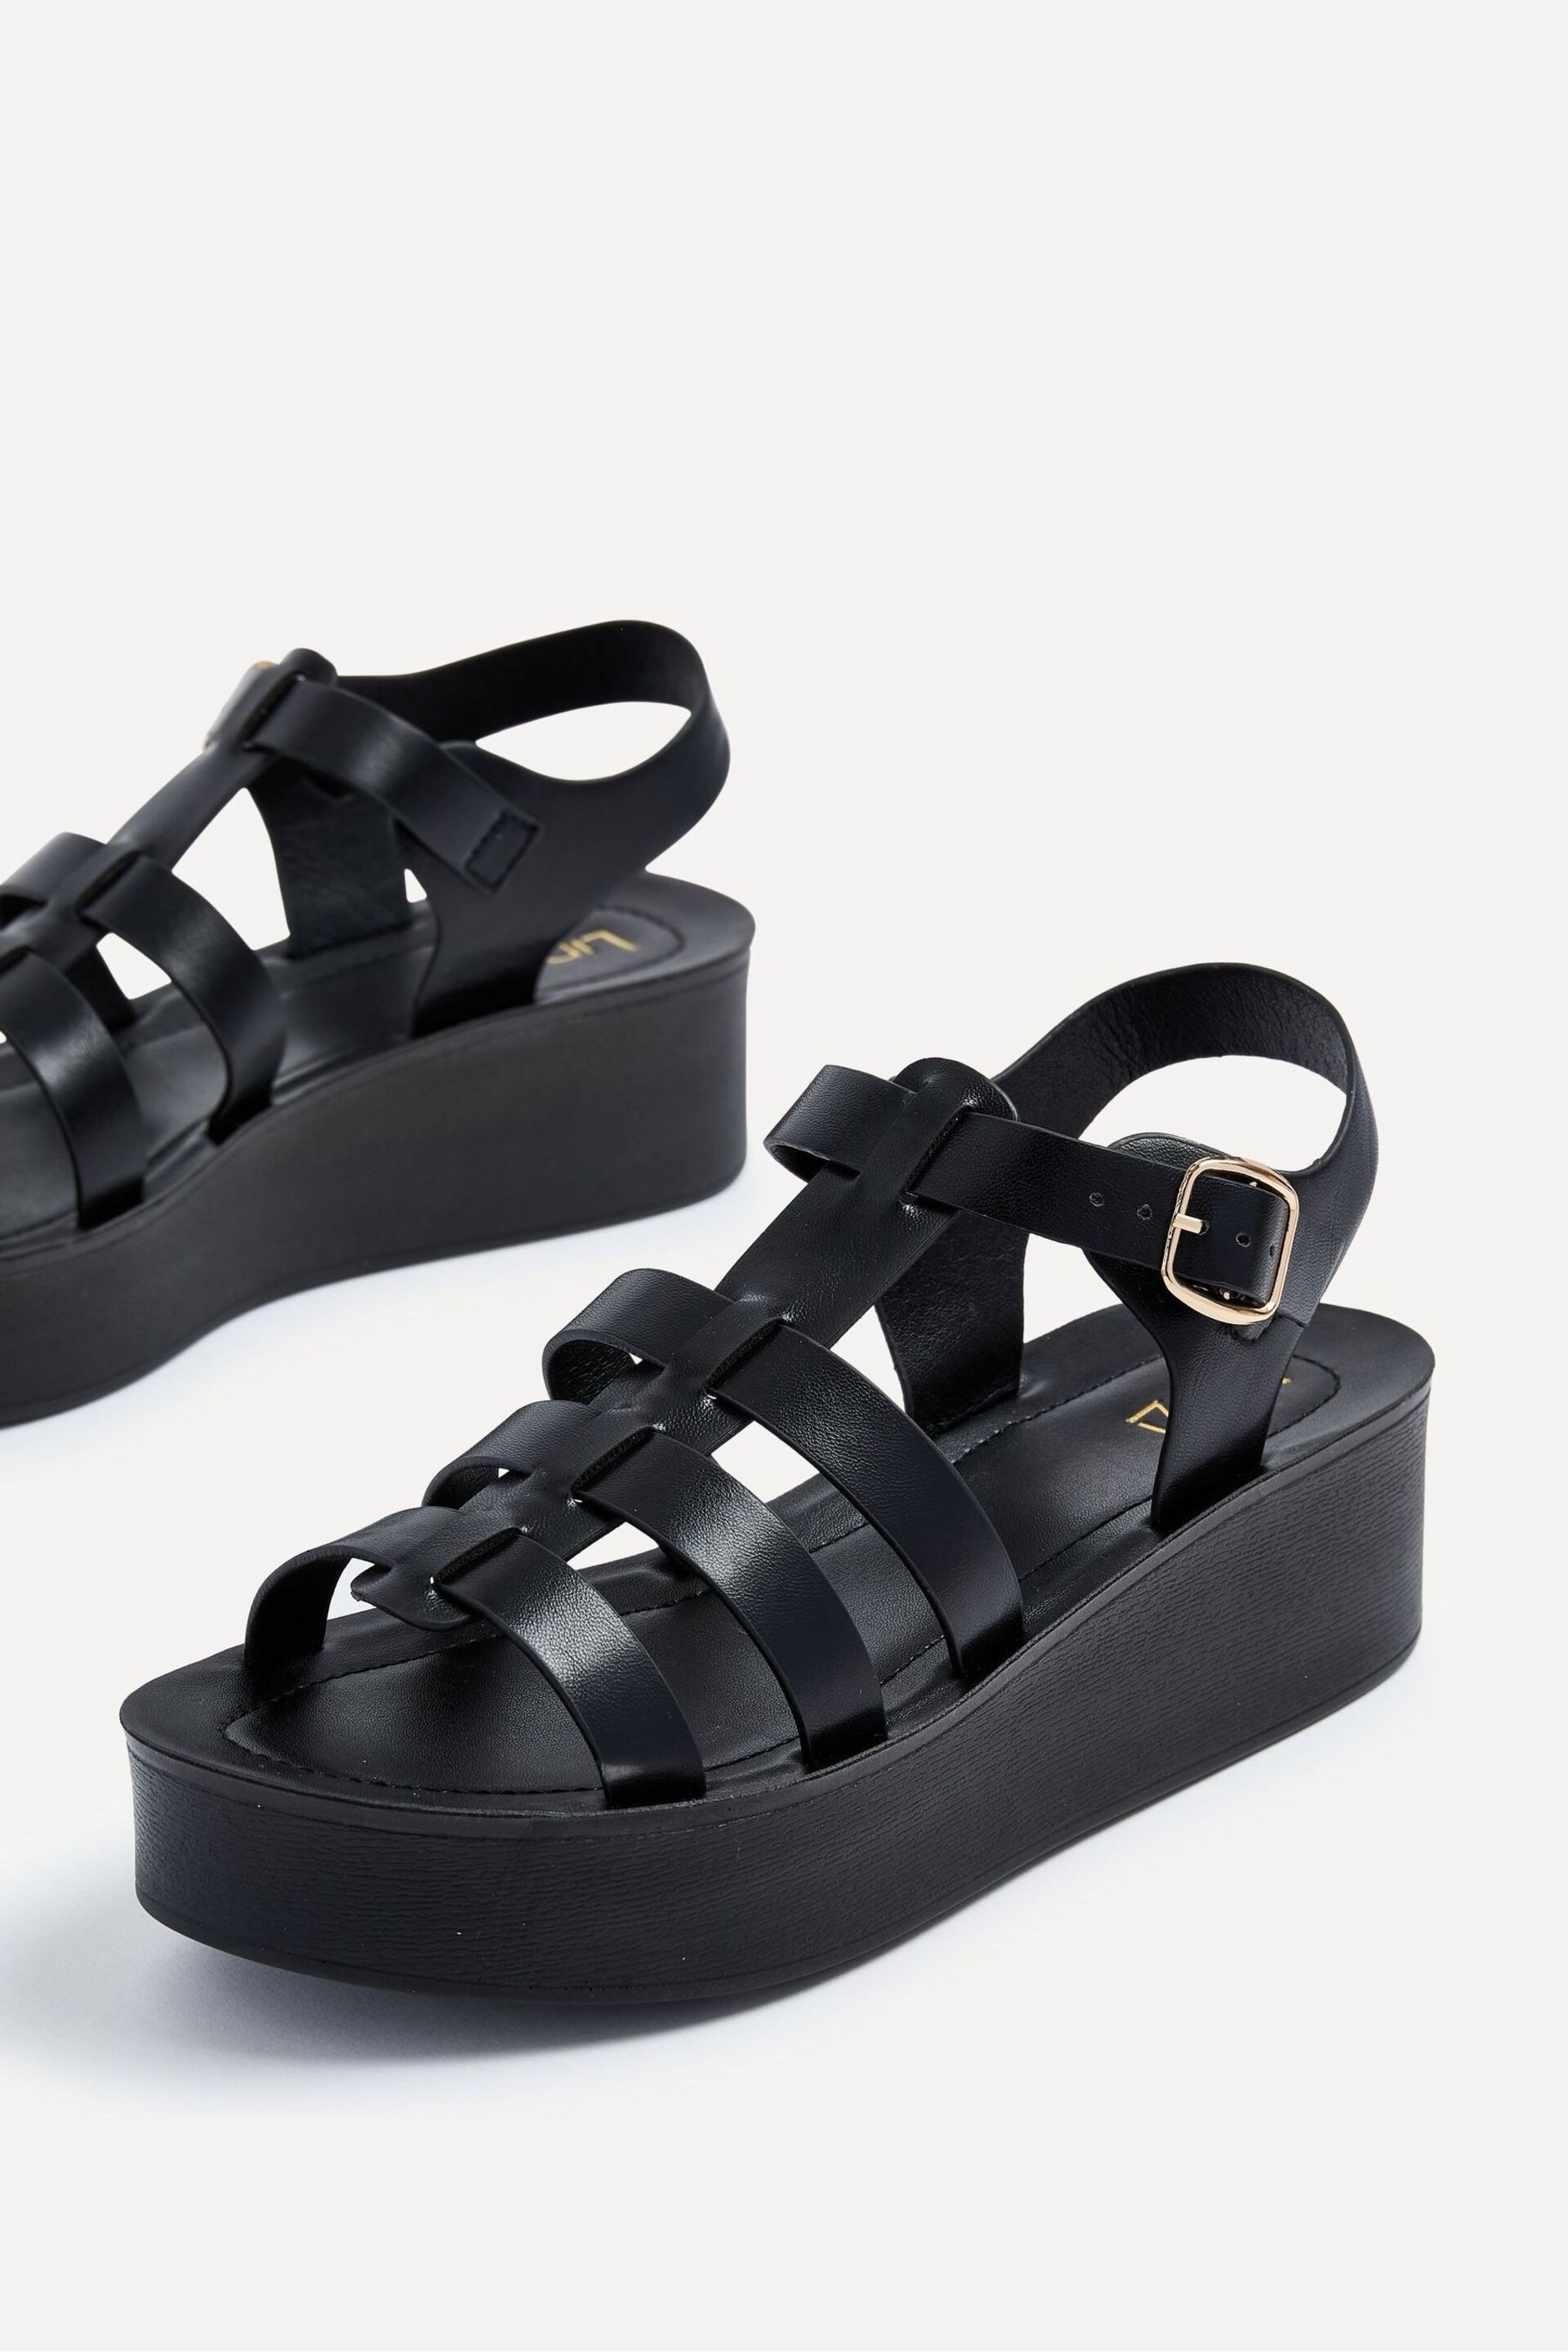 Linzi Black Rhoades Gladiator Inspired Flatform Sandals - Image 5 of 5